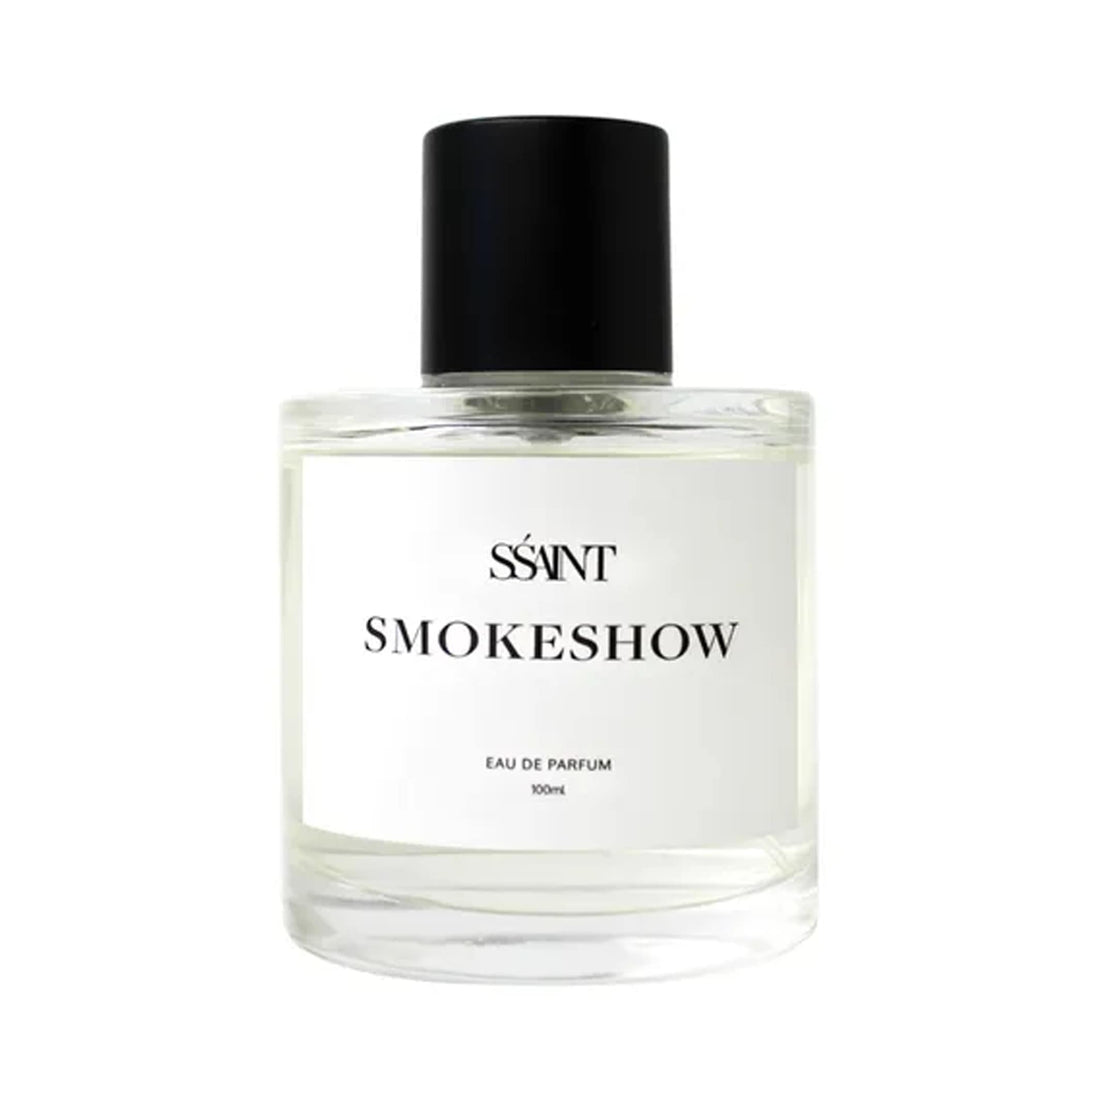 SŚAINT Parfum Smokeshow 100ml